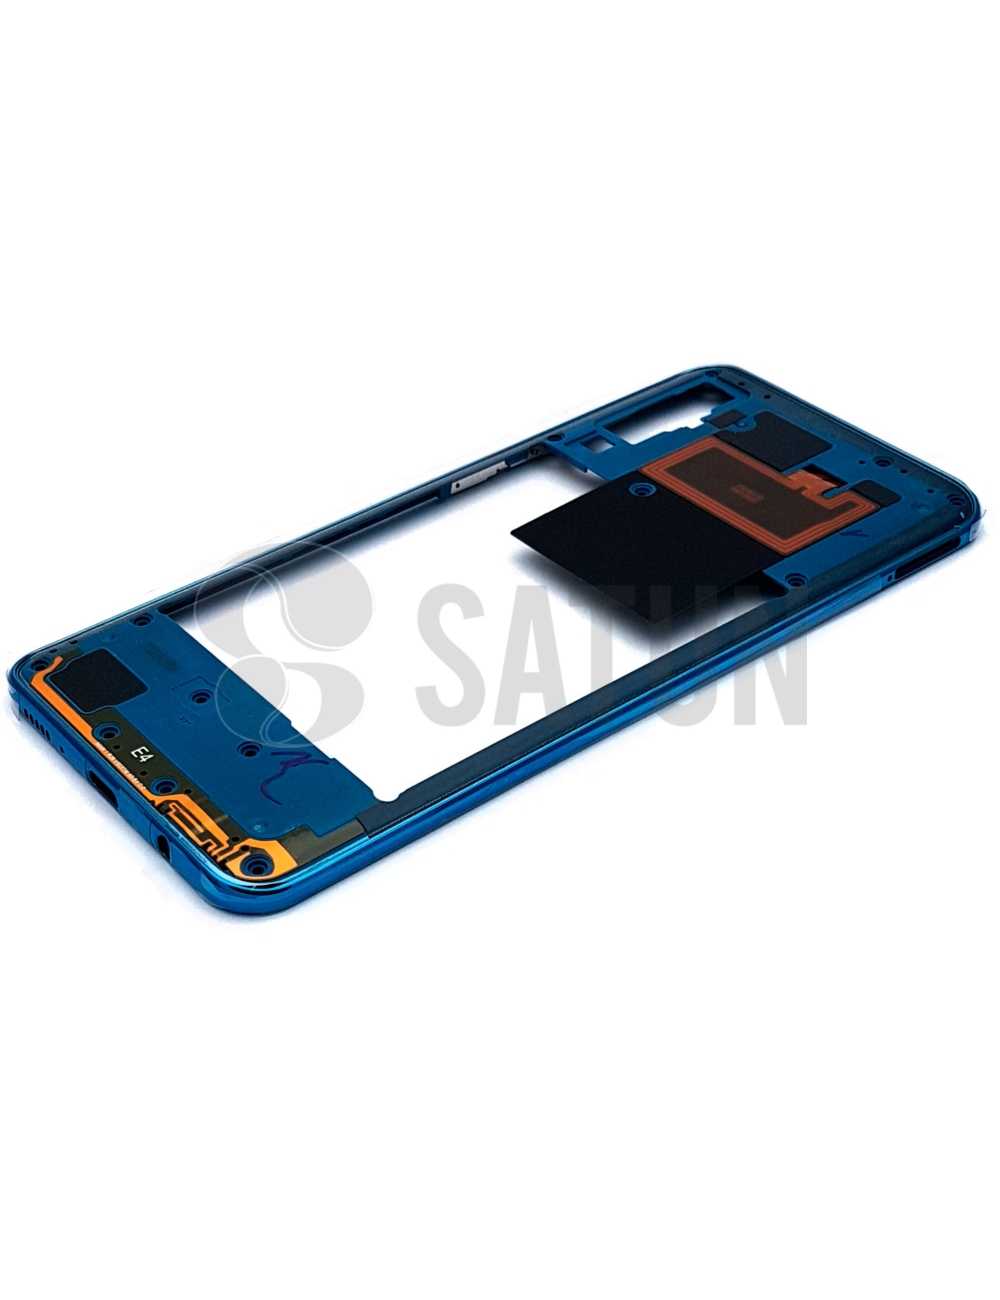 Carcasa intermedia Samsung Galaxy A50 azul